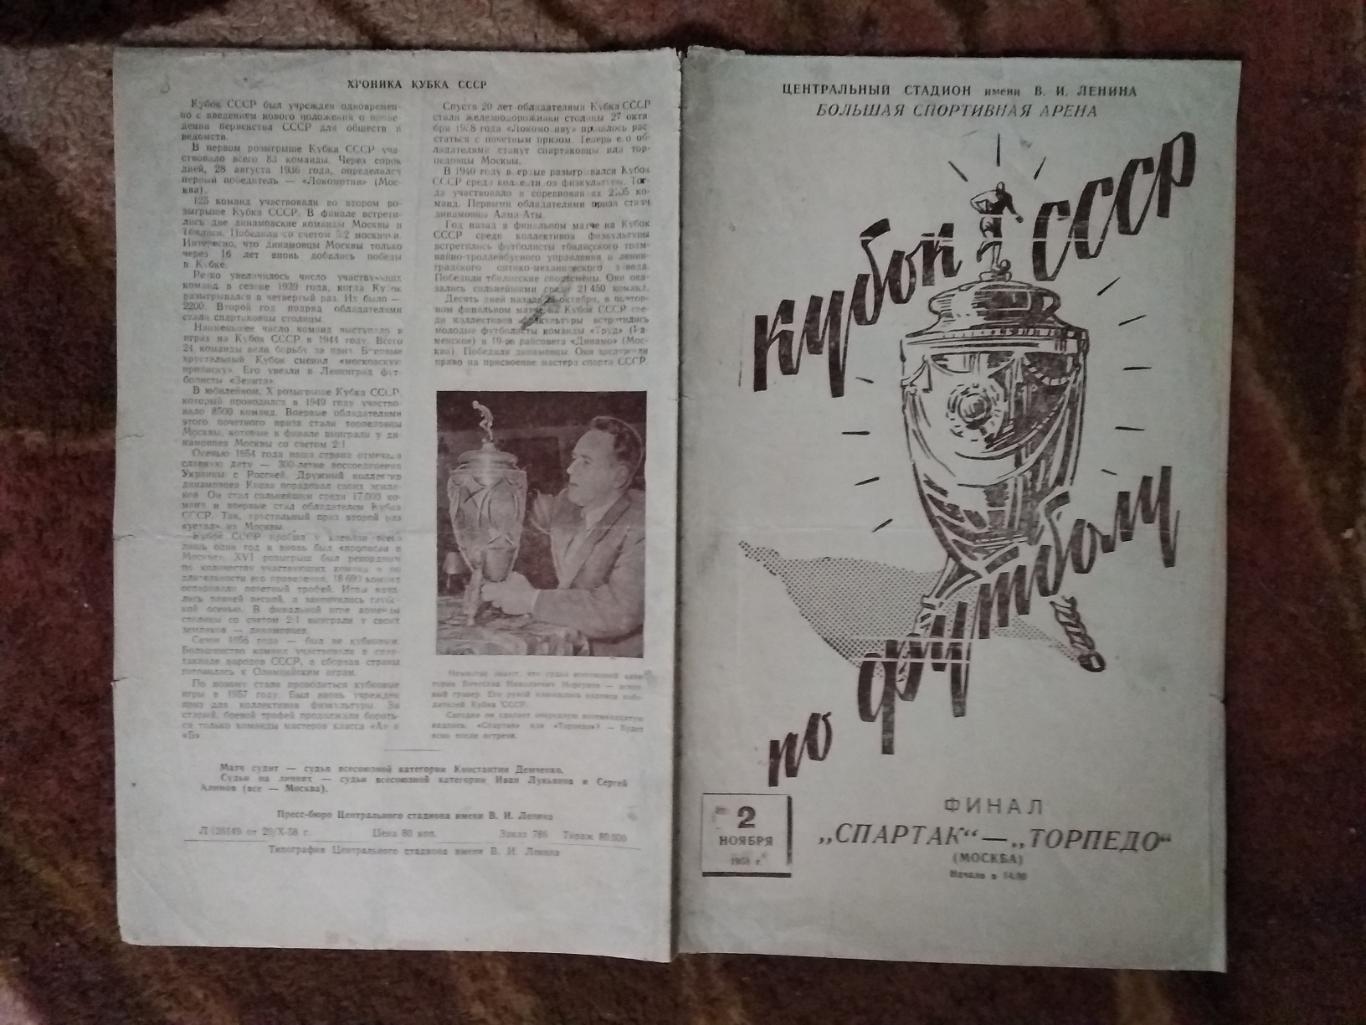 Спартак (Москва) - Торпедо (Москва).Кубок СССР финал 1958 г.